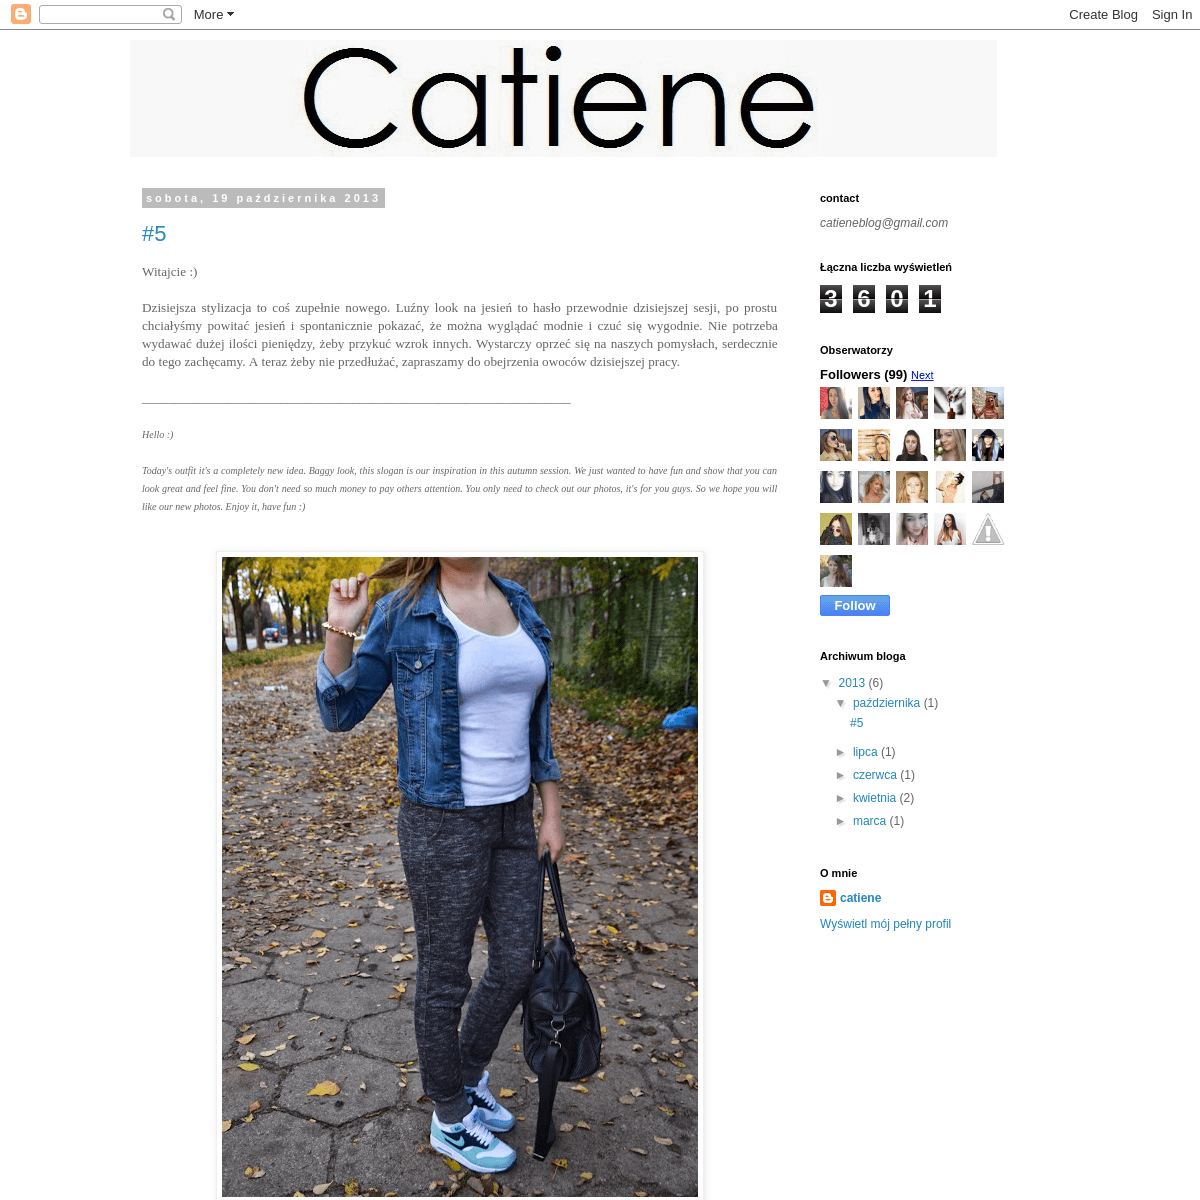 A complete backup of catiene.blogspot.com